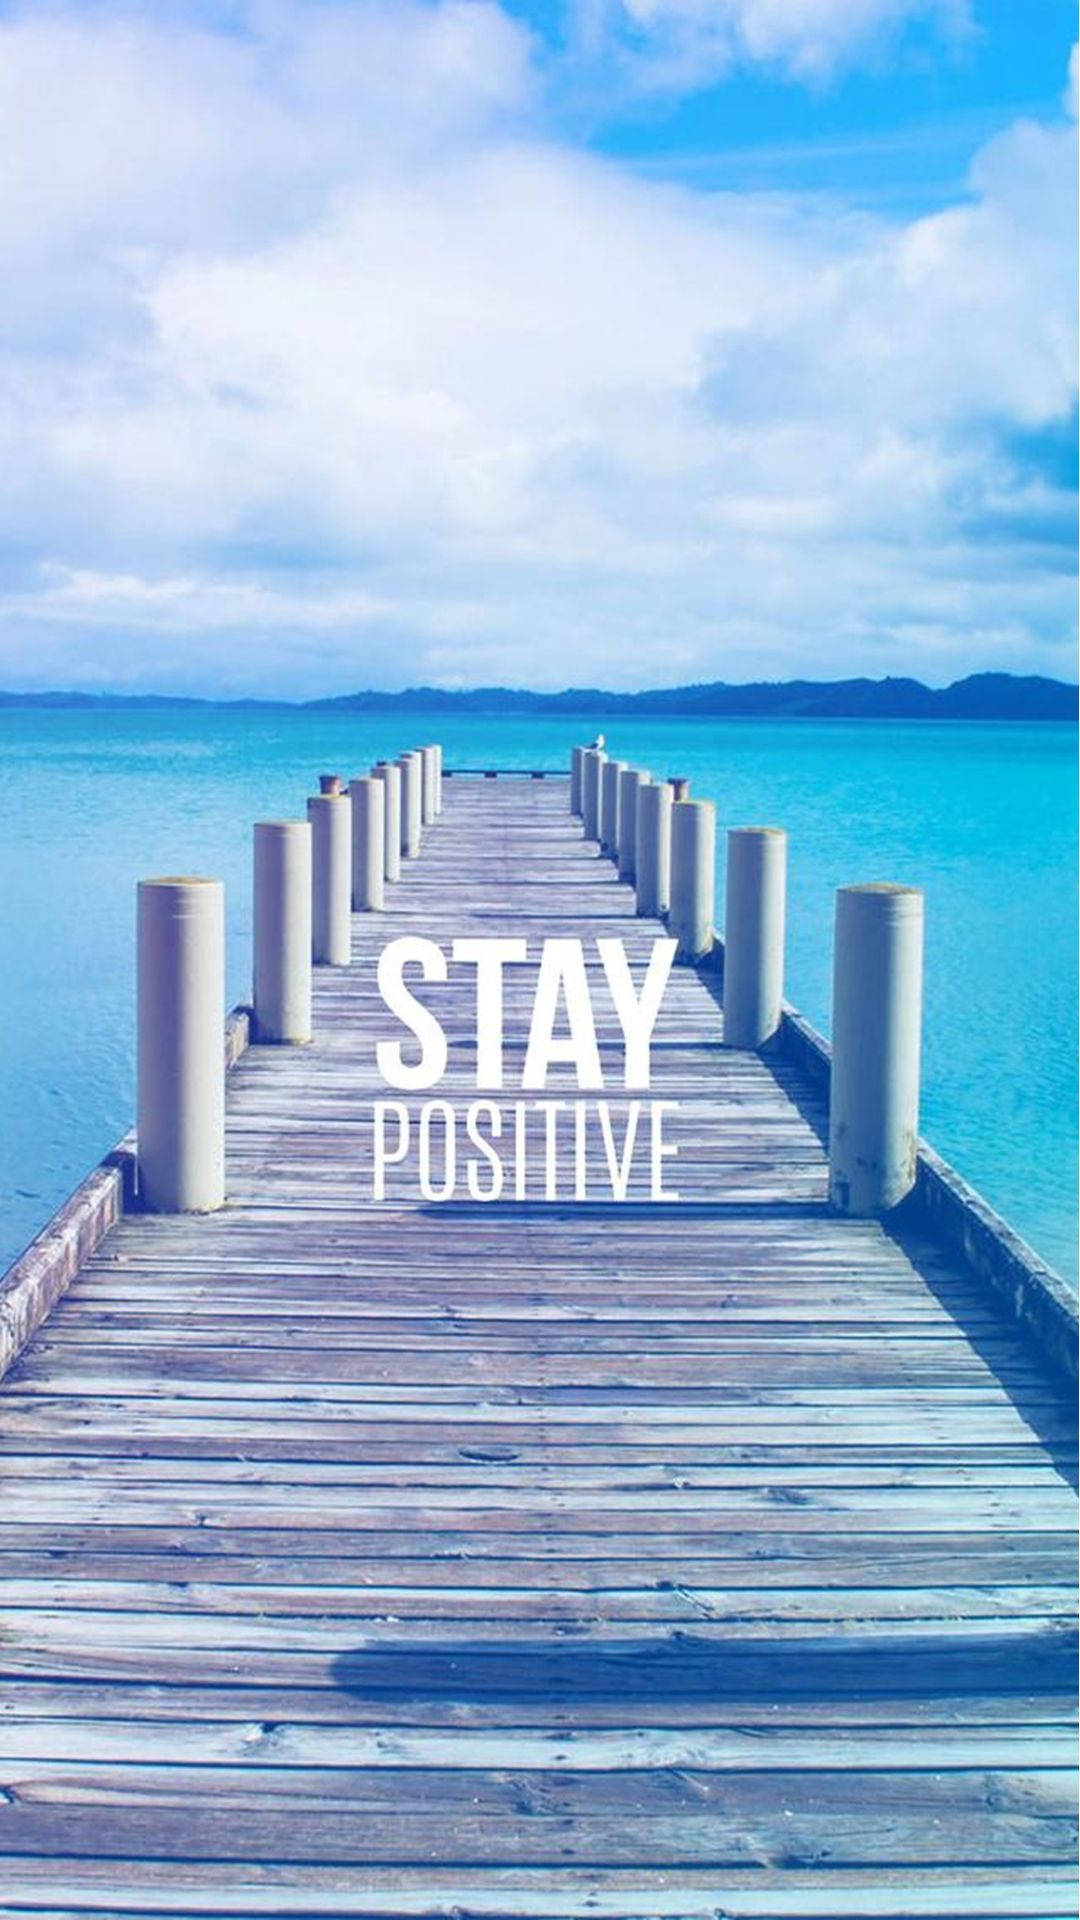 Positive Motivation Stay Positive Wallpaper